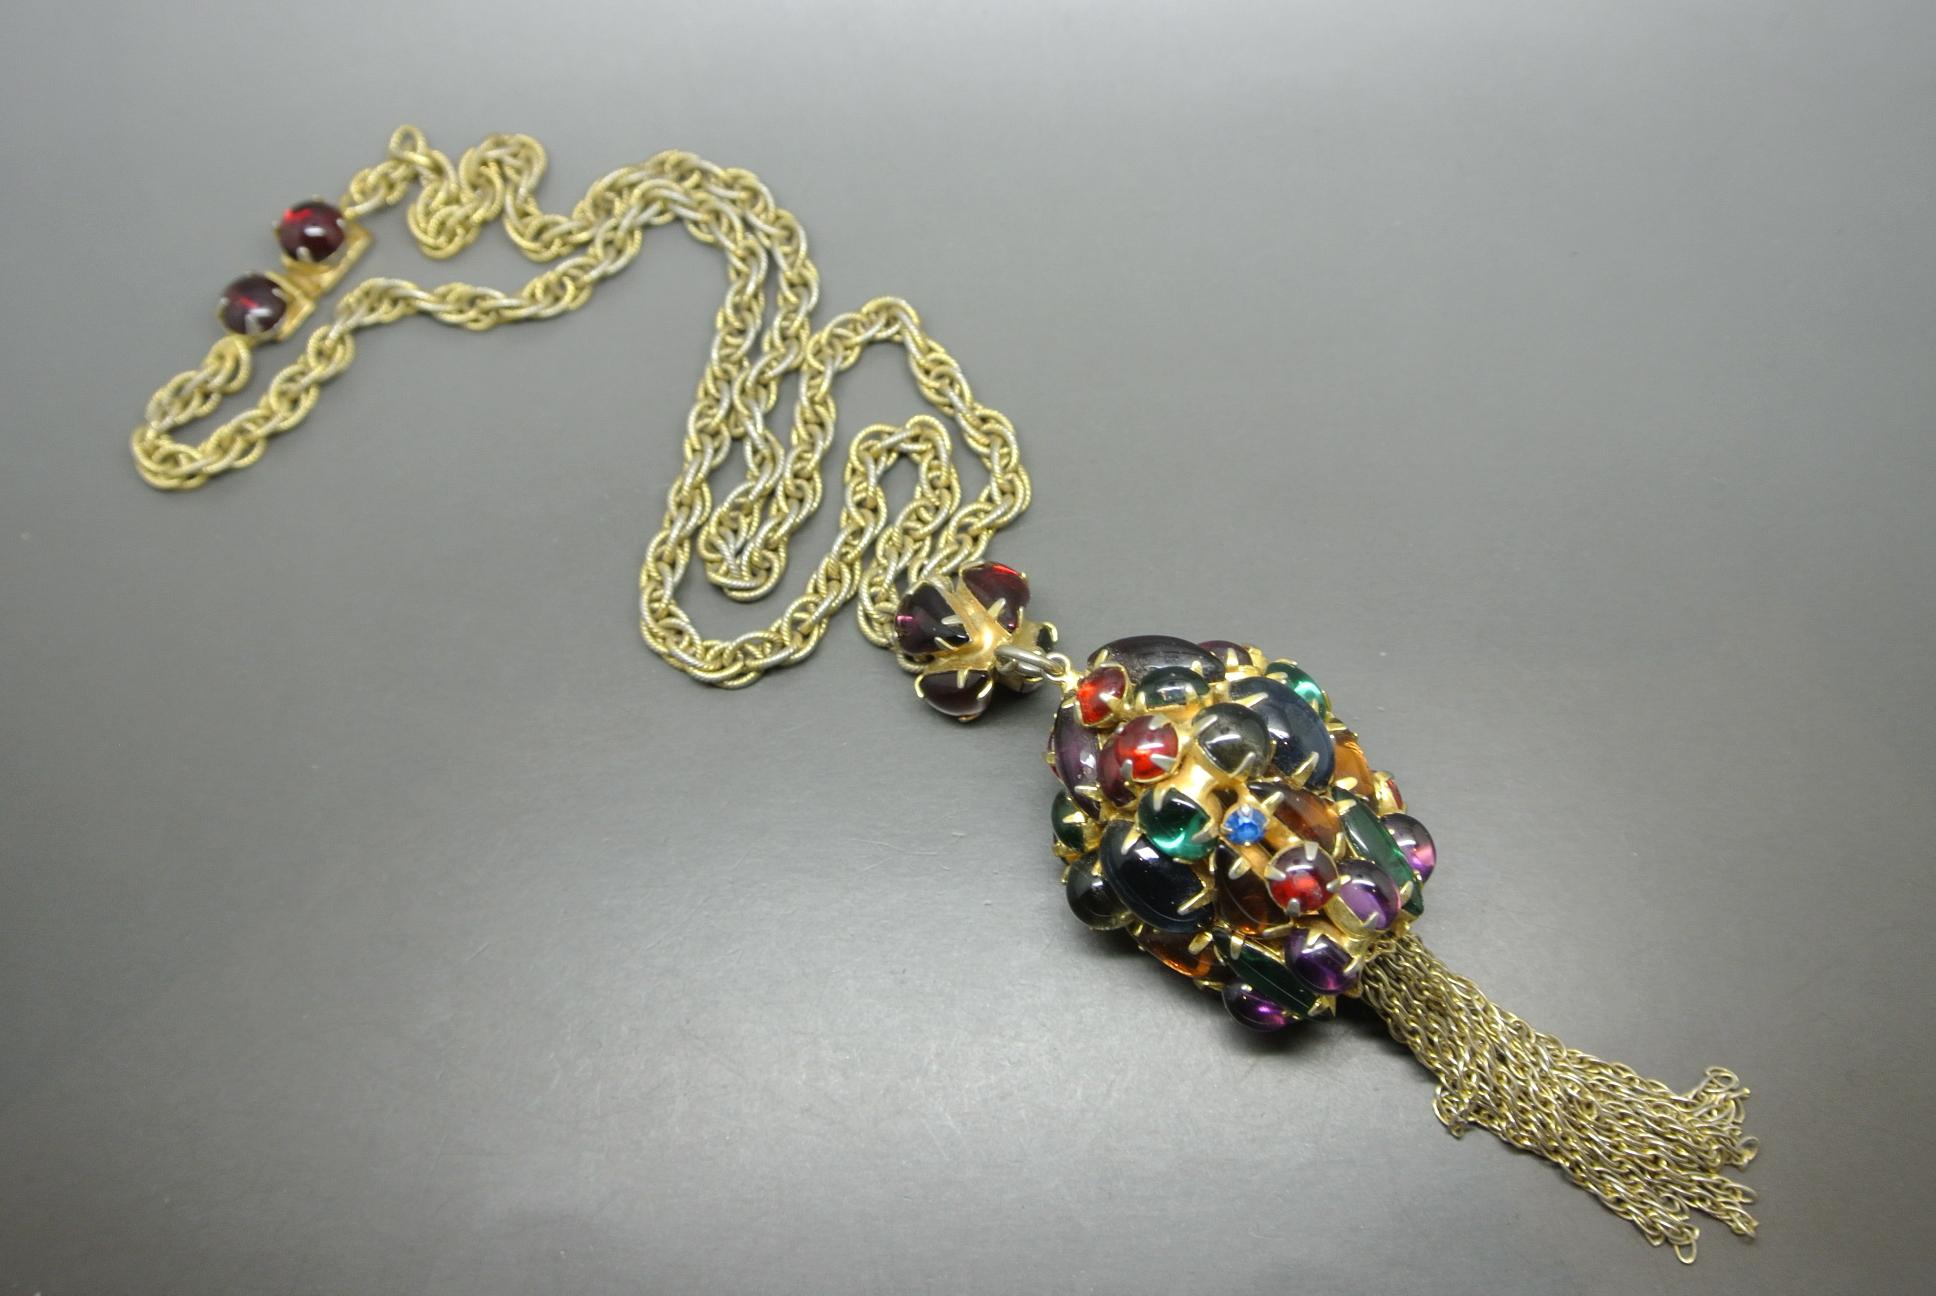 Schiaparelli Necklace
Dated 1950s
chain length-50cm
pendant length-12cm
signed 